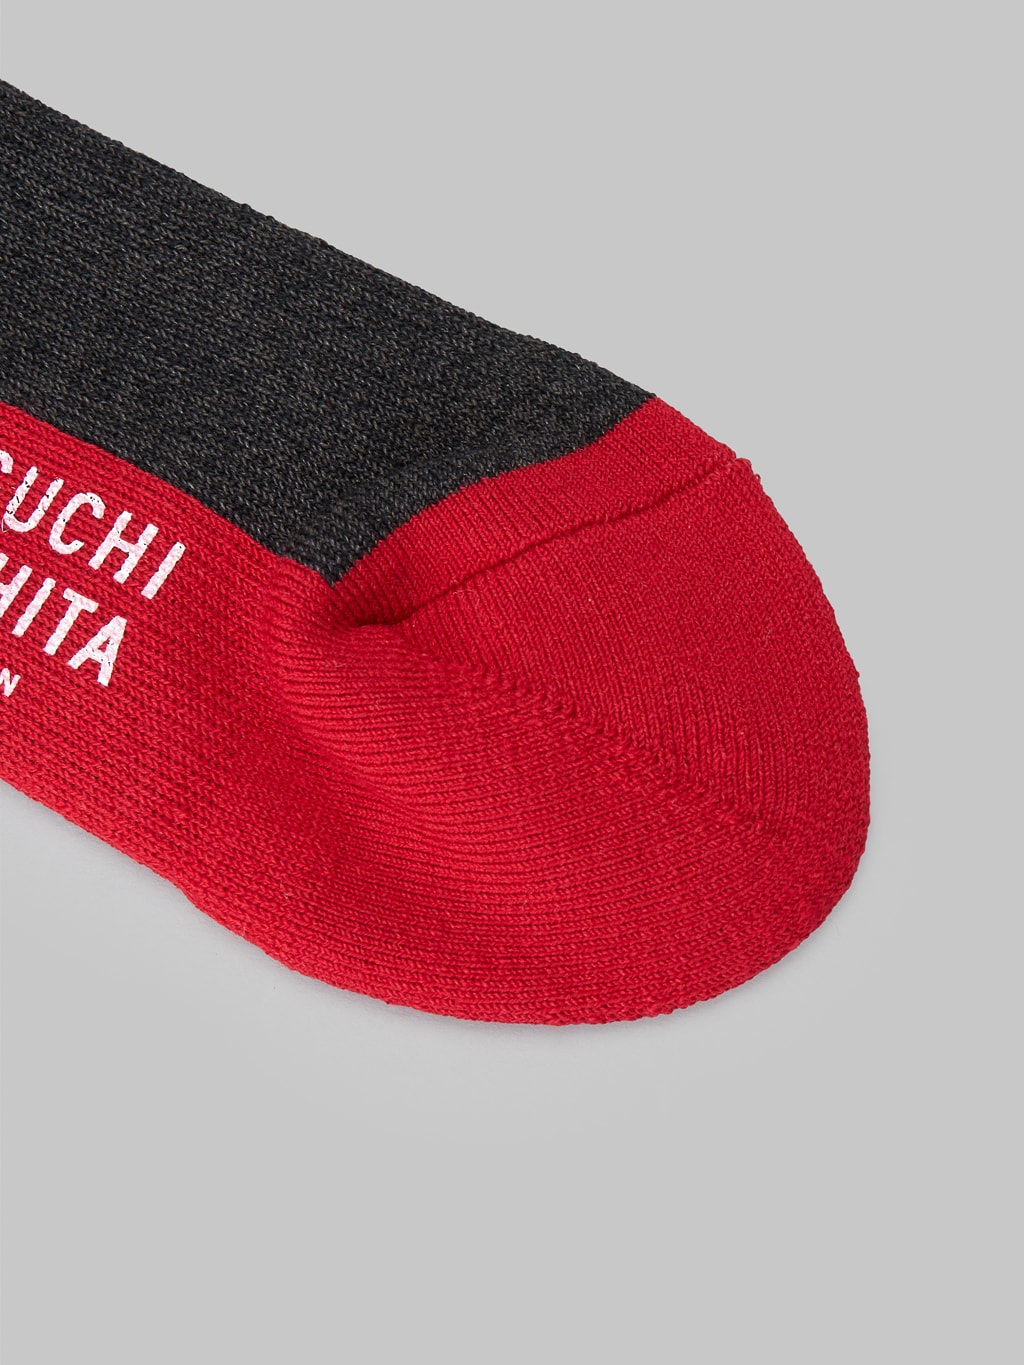 Nishiguchi Kutsushita Wool Pile Walk Socks Charcoal fabric texture